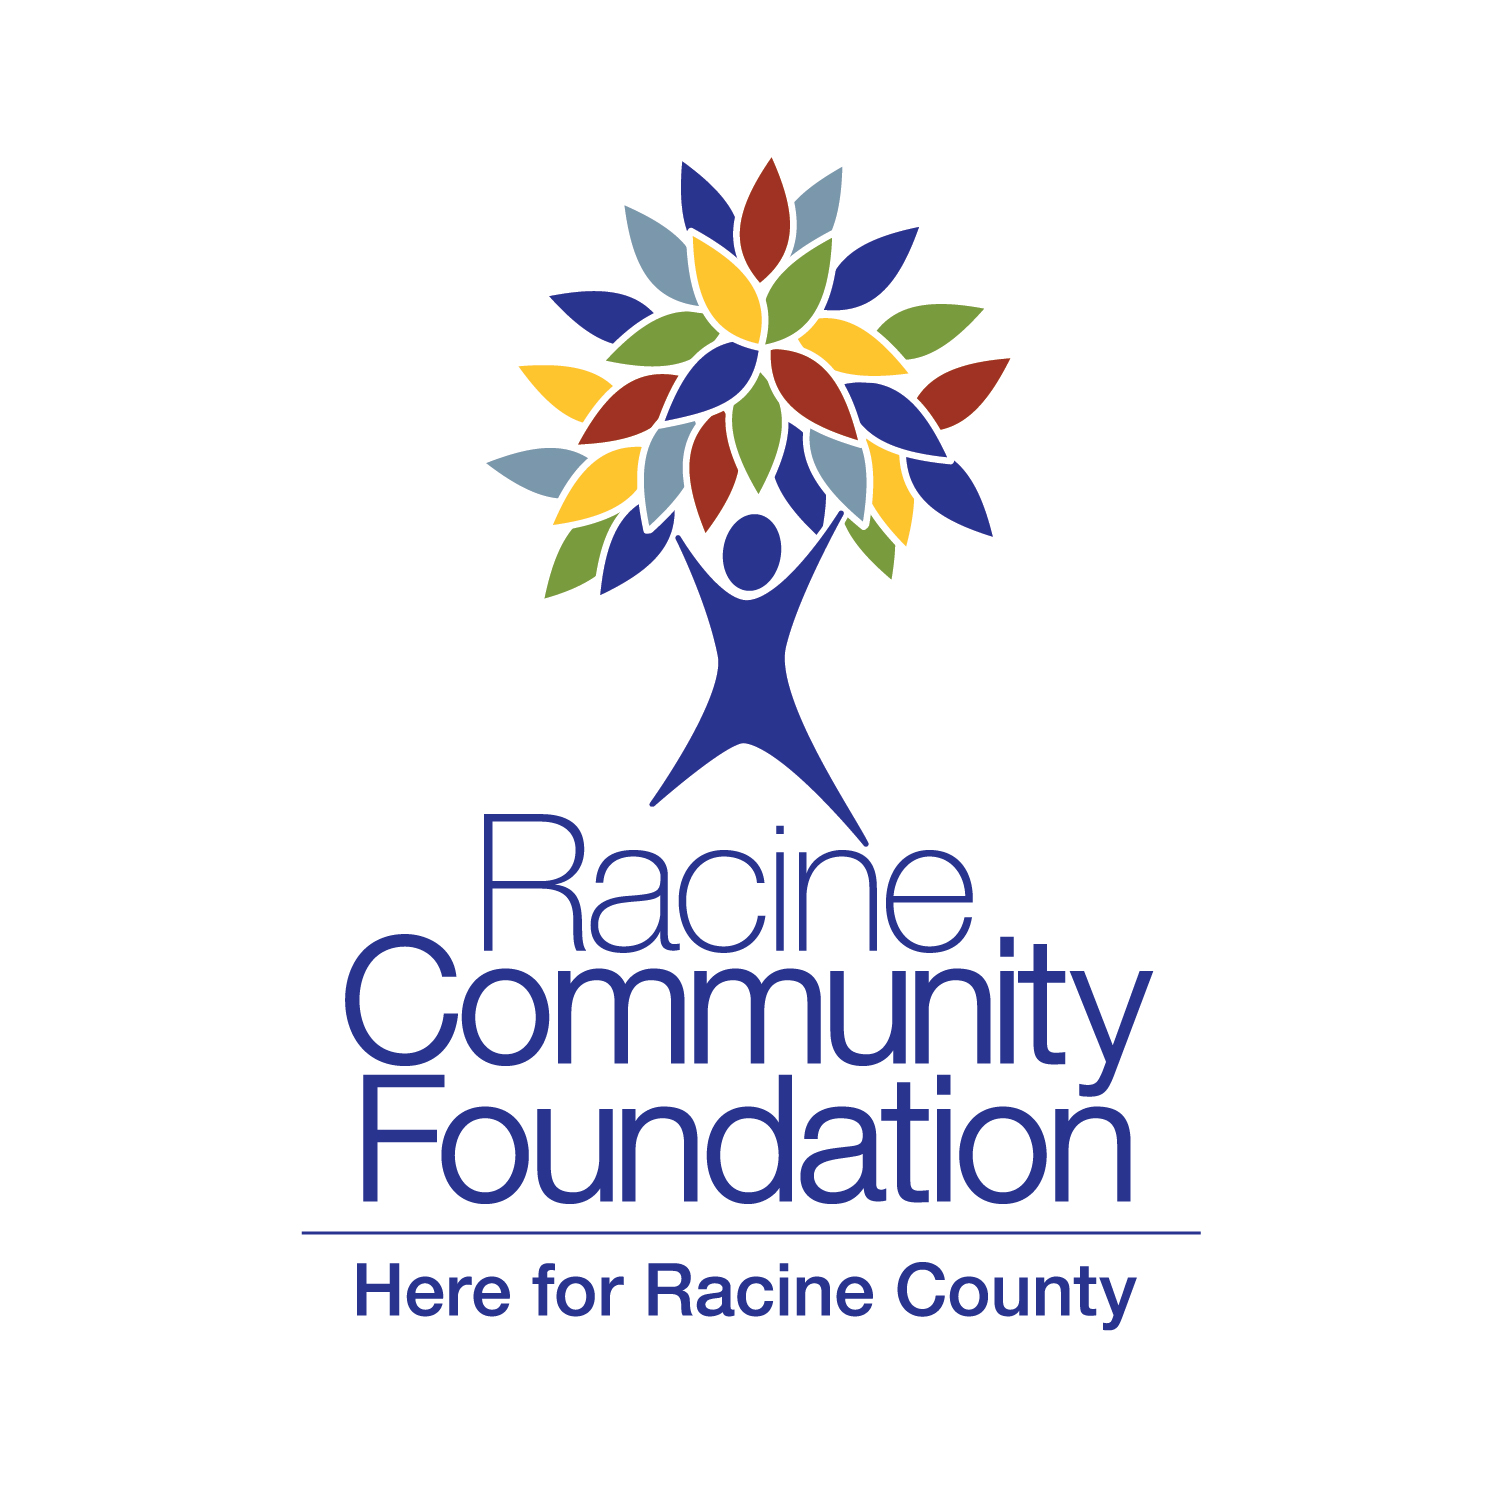 Racine Community Foundation - Here for Racine County